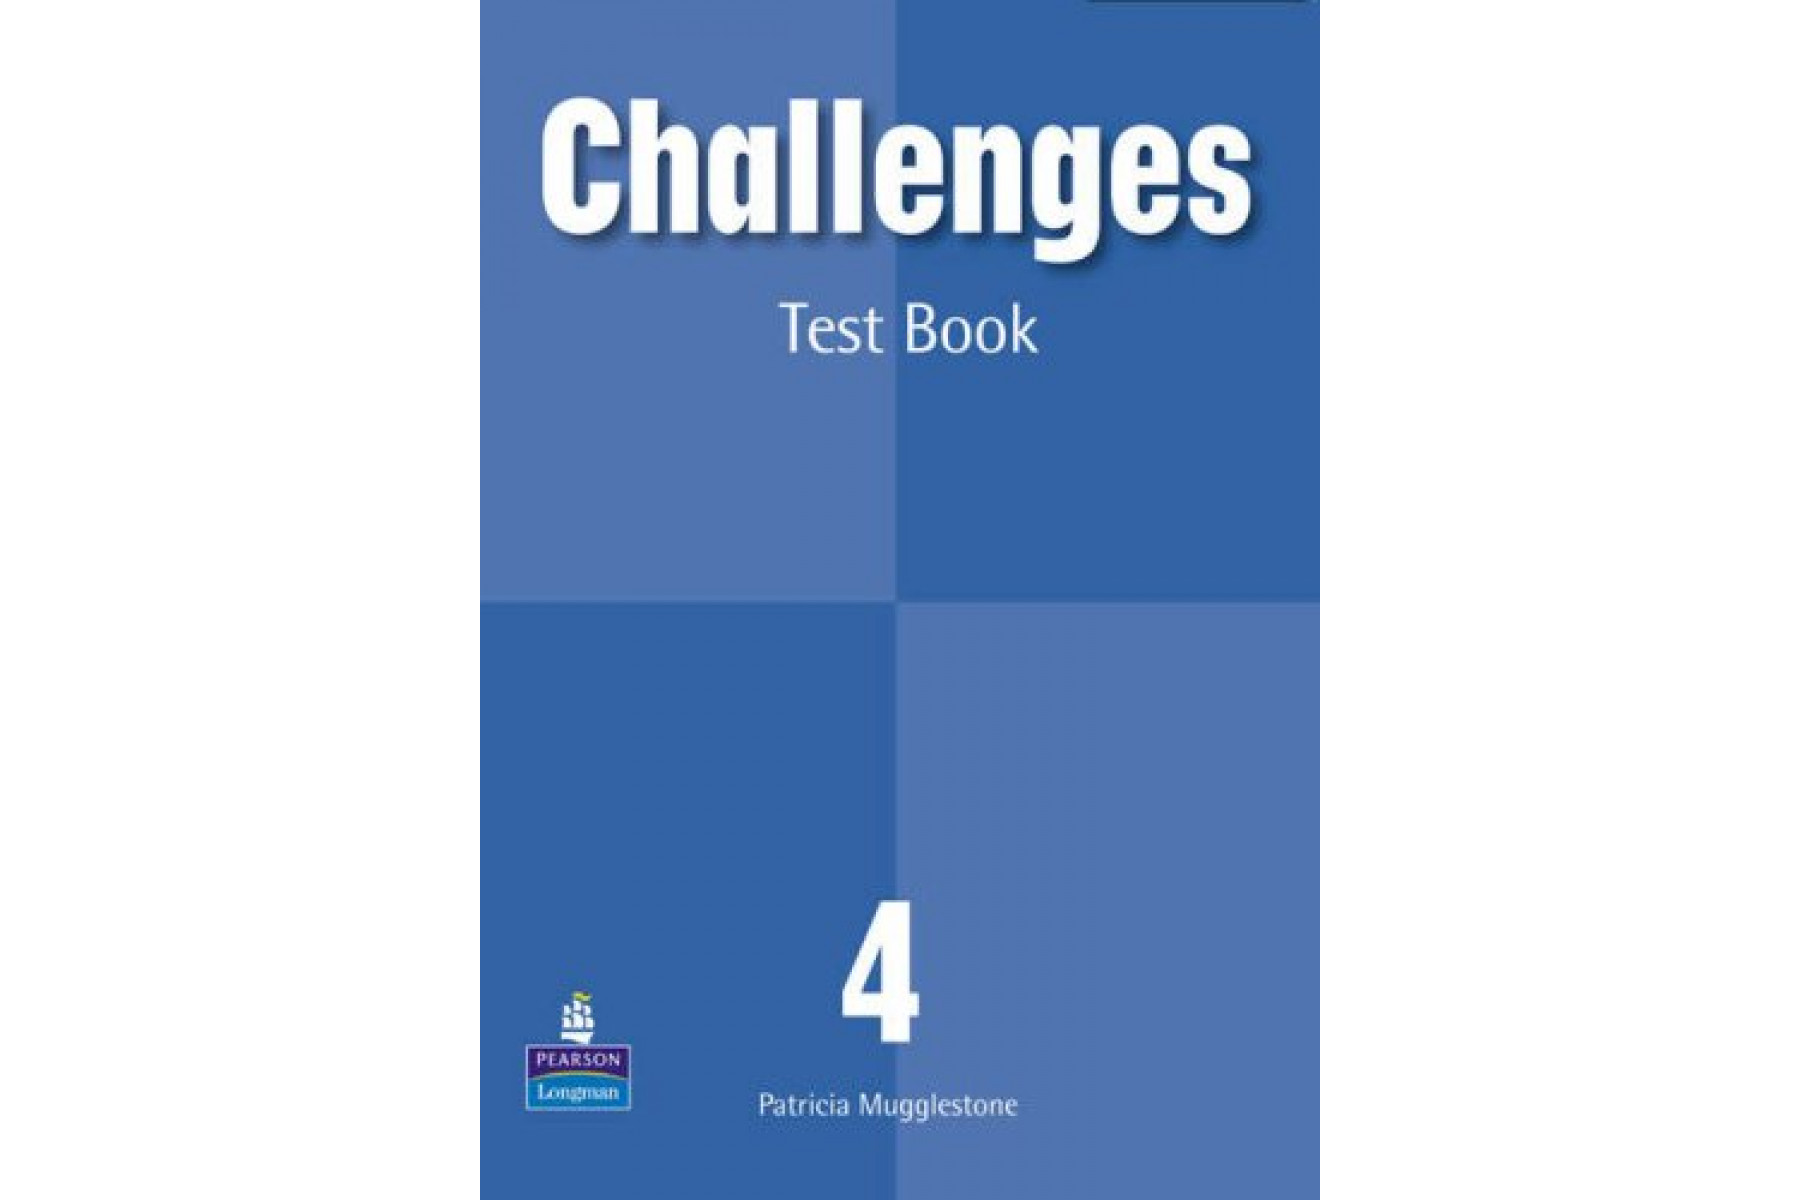 English test book. А 4 Challenge. Test book. Challenges 4 учебник. Учебники Pearson по английскому.